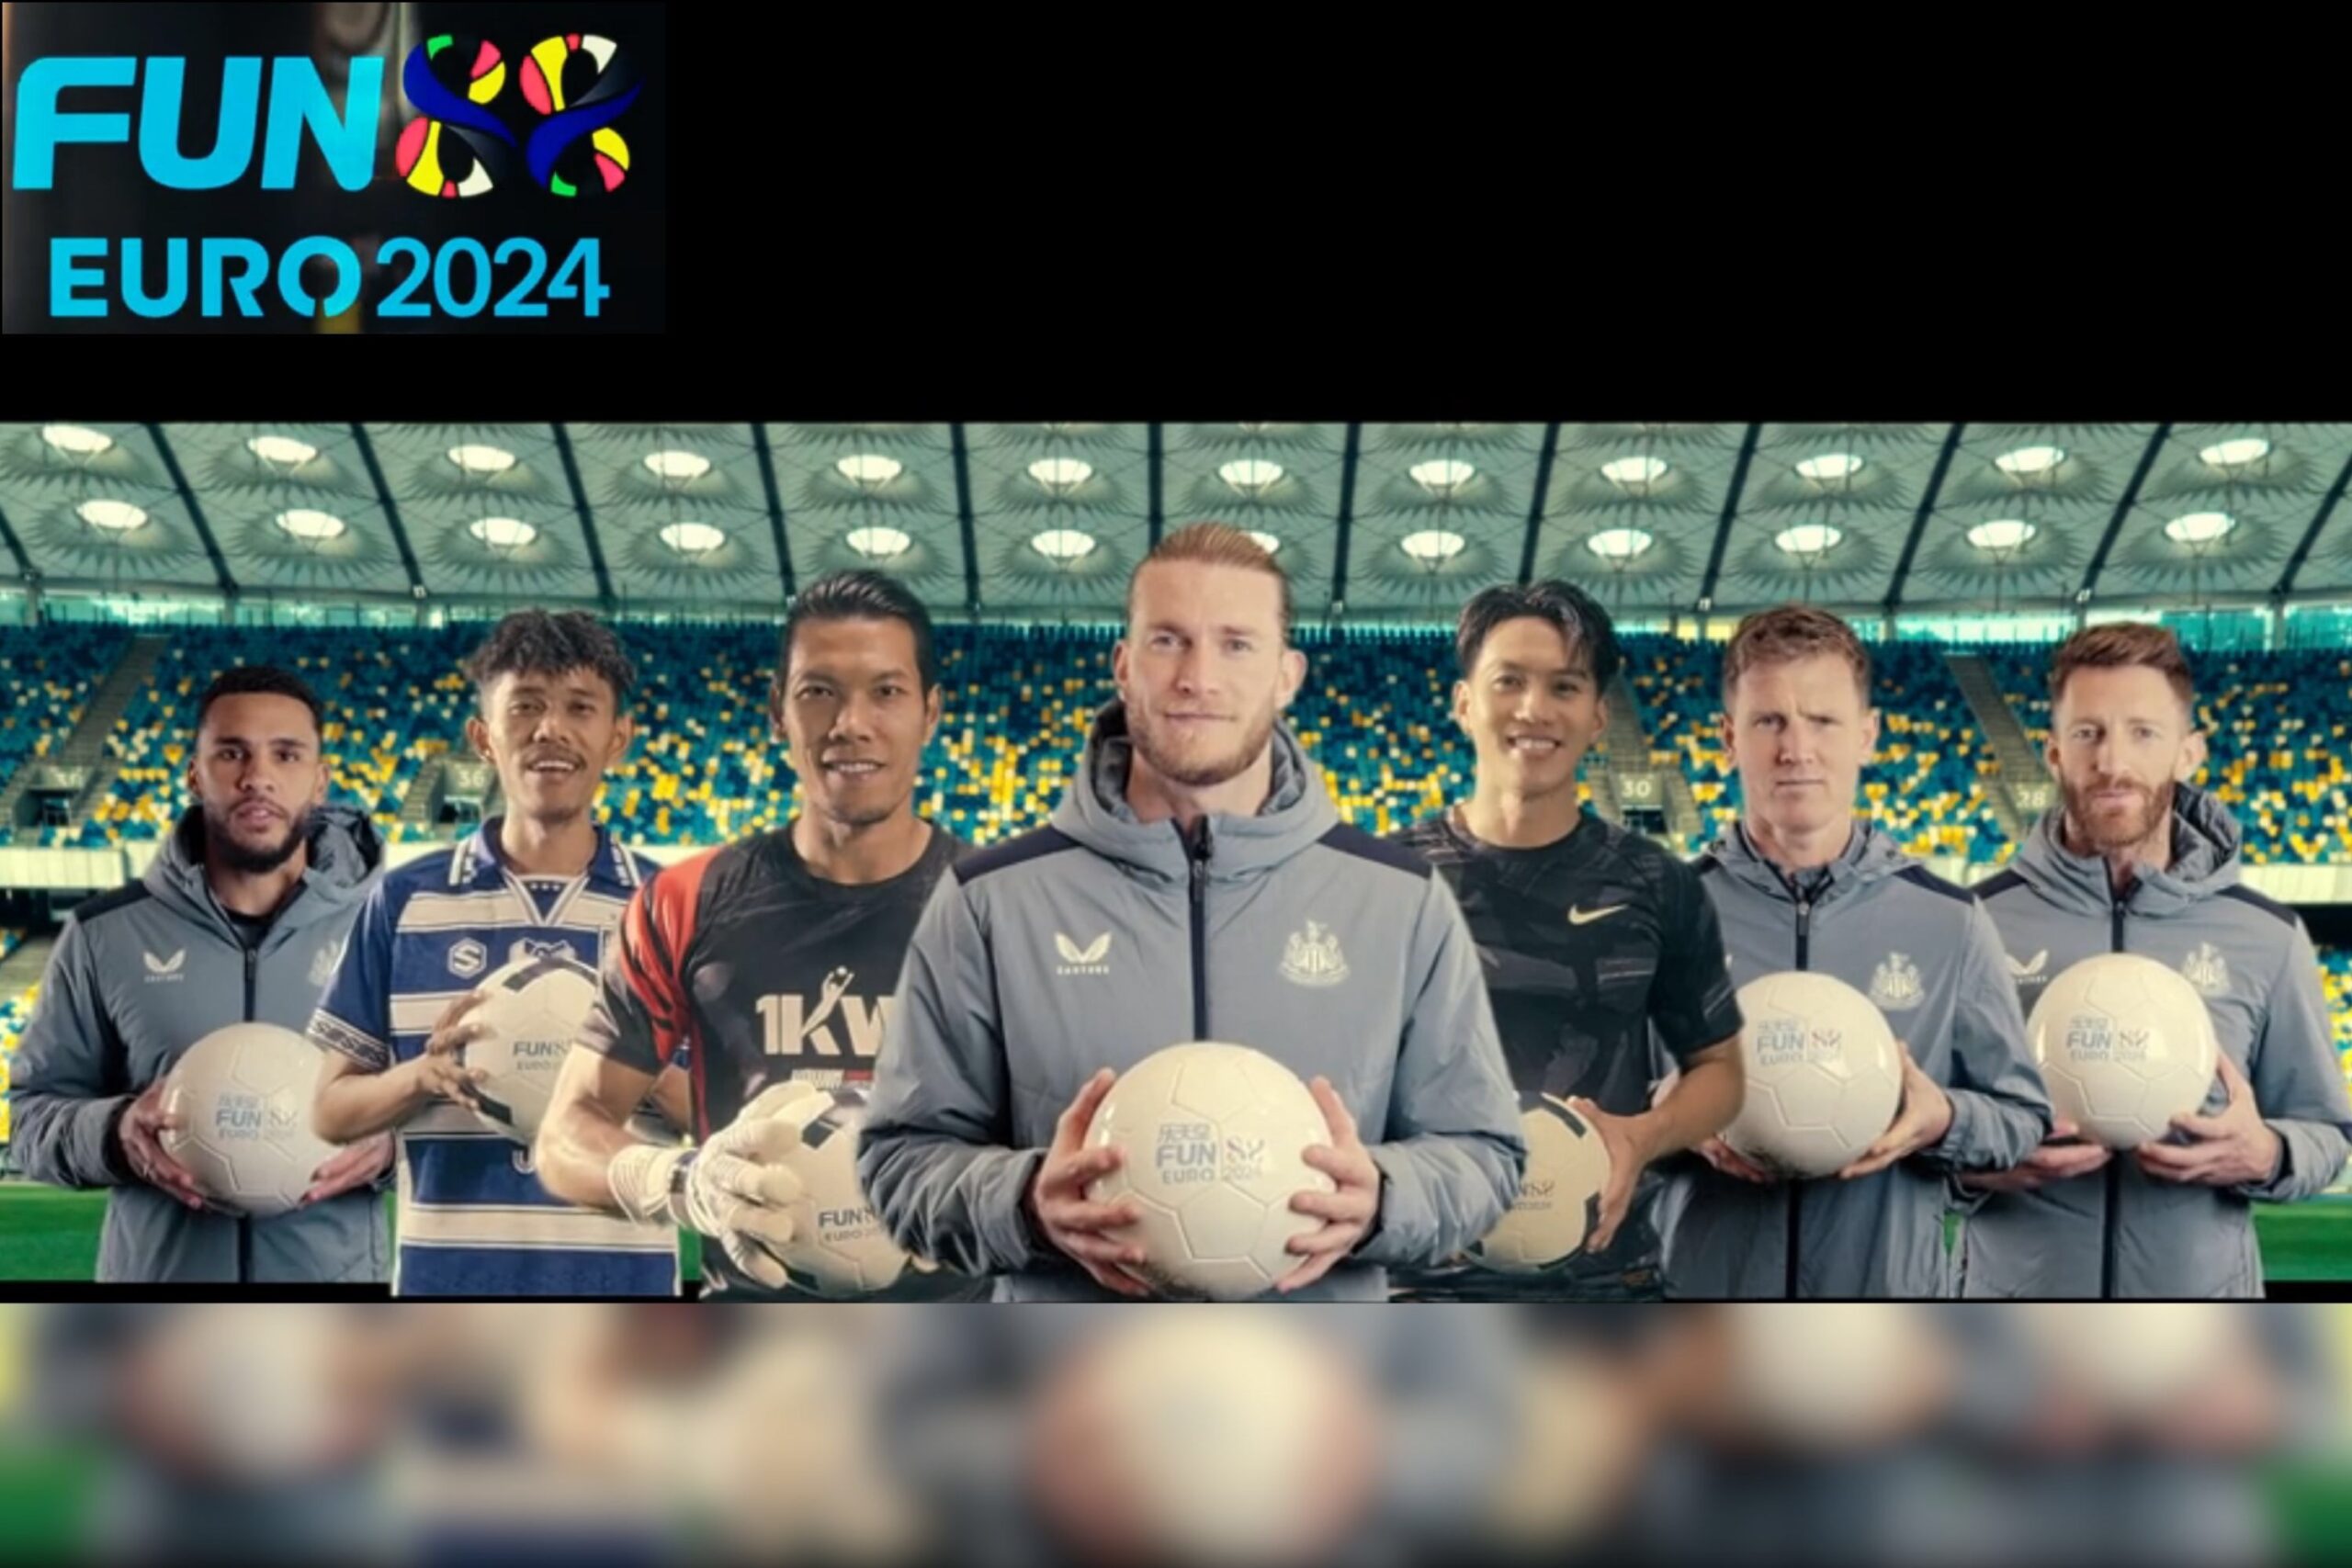 ‘EUROhaveFUN’ เชียร์ศึกฟุตบอลยูโร 2024 สุดมันส์ กับนักเตะนิวคาสเซิลยูไนเต็ด